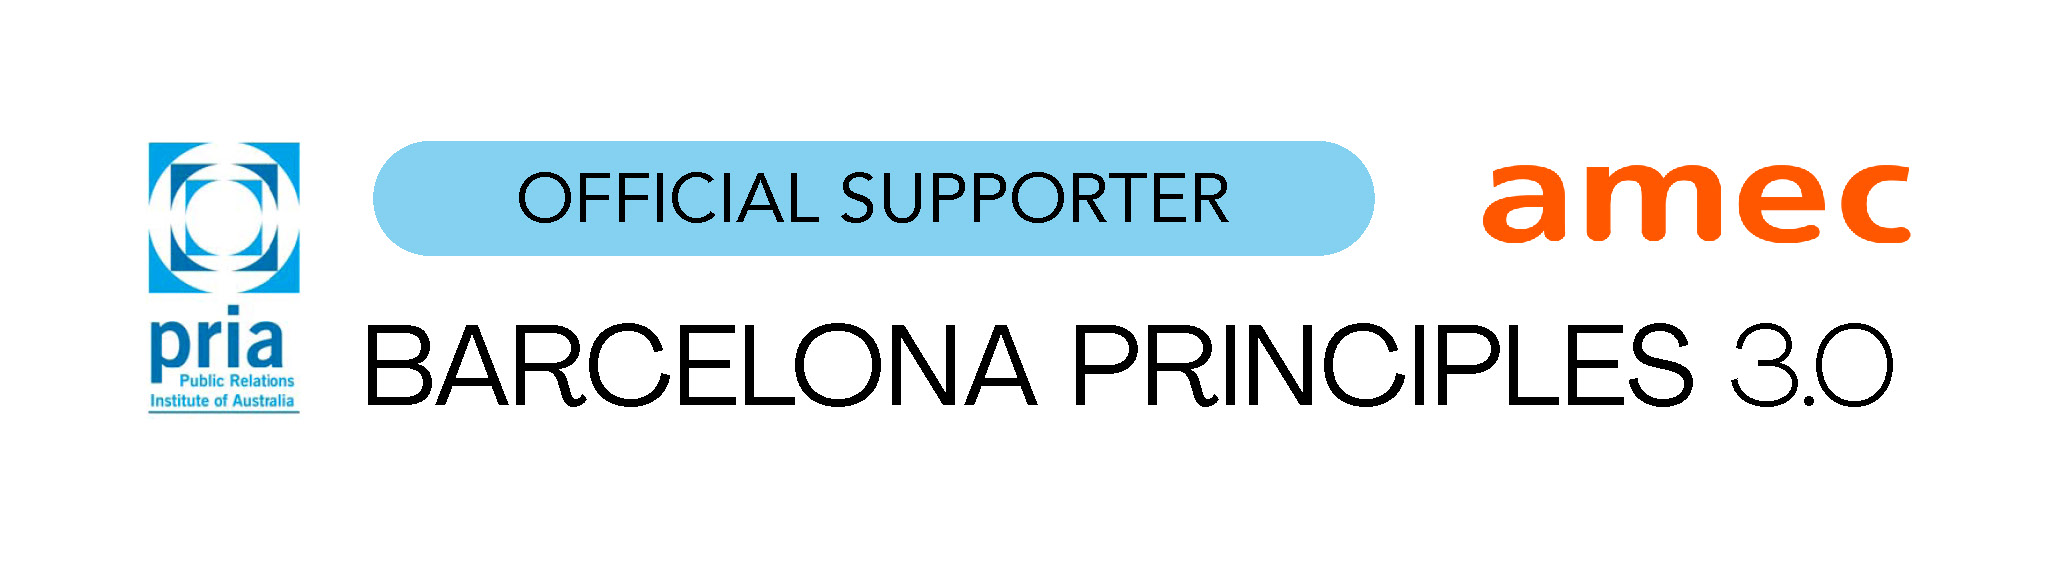 Primary gets behind Barcelona Principles 3.0